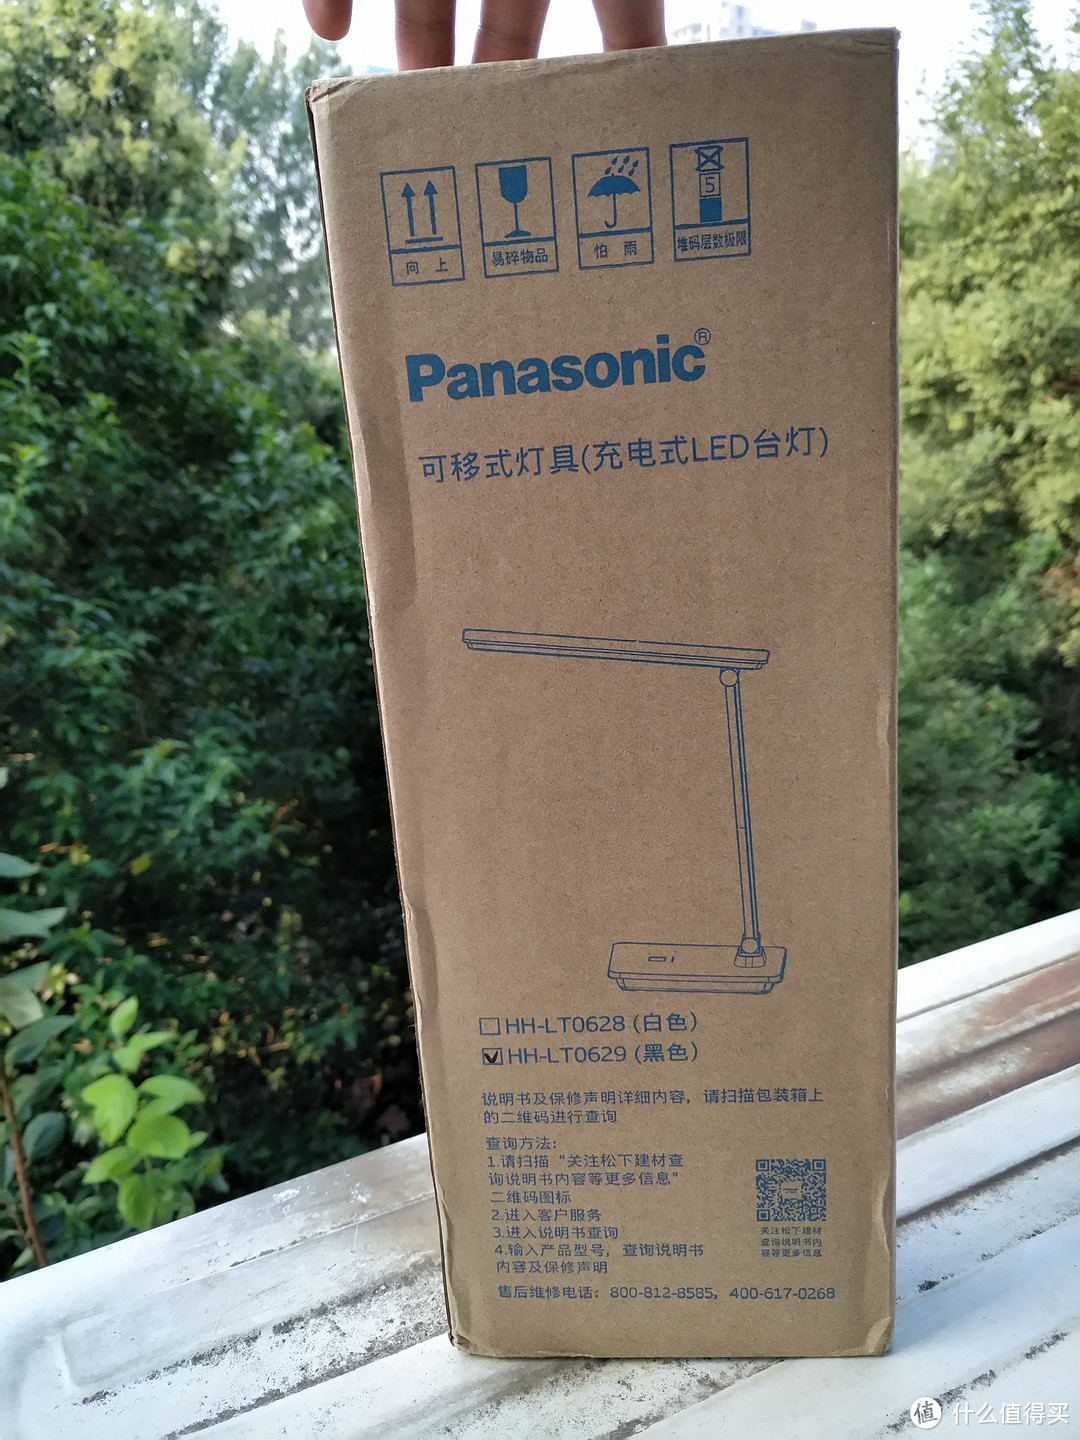 Panasonic 松下致翰黑HHLT0629可充电折叠台灯简评